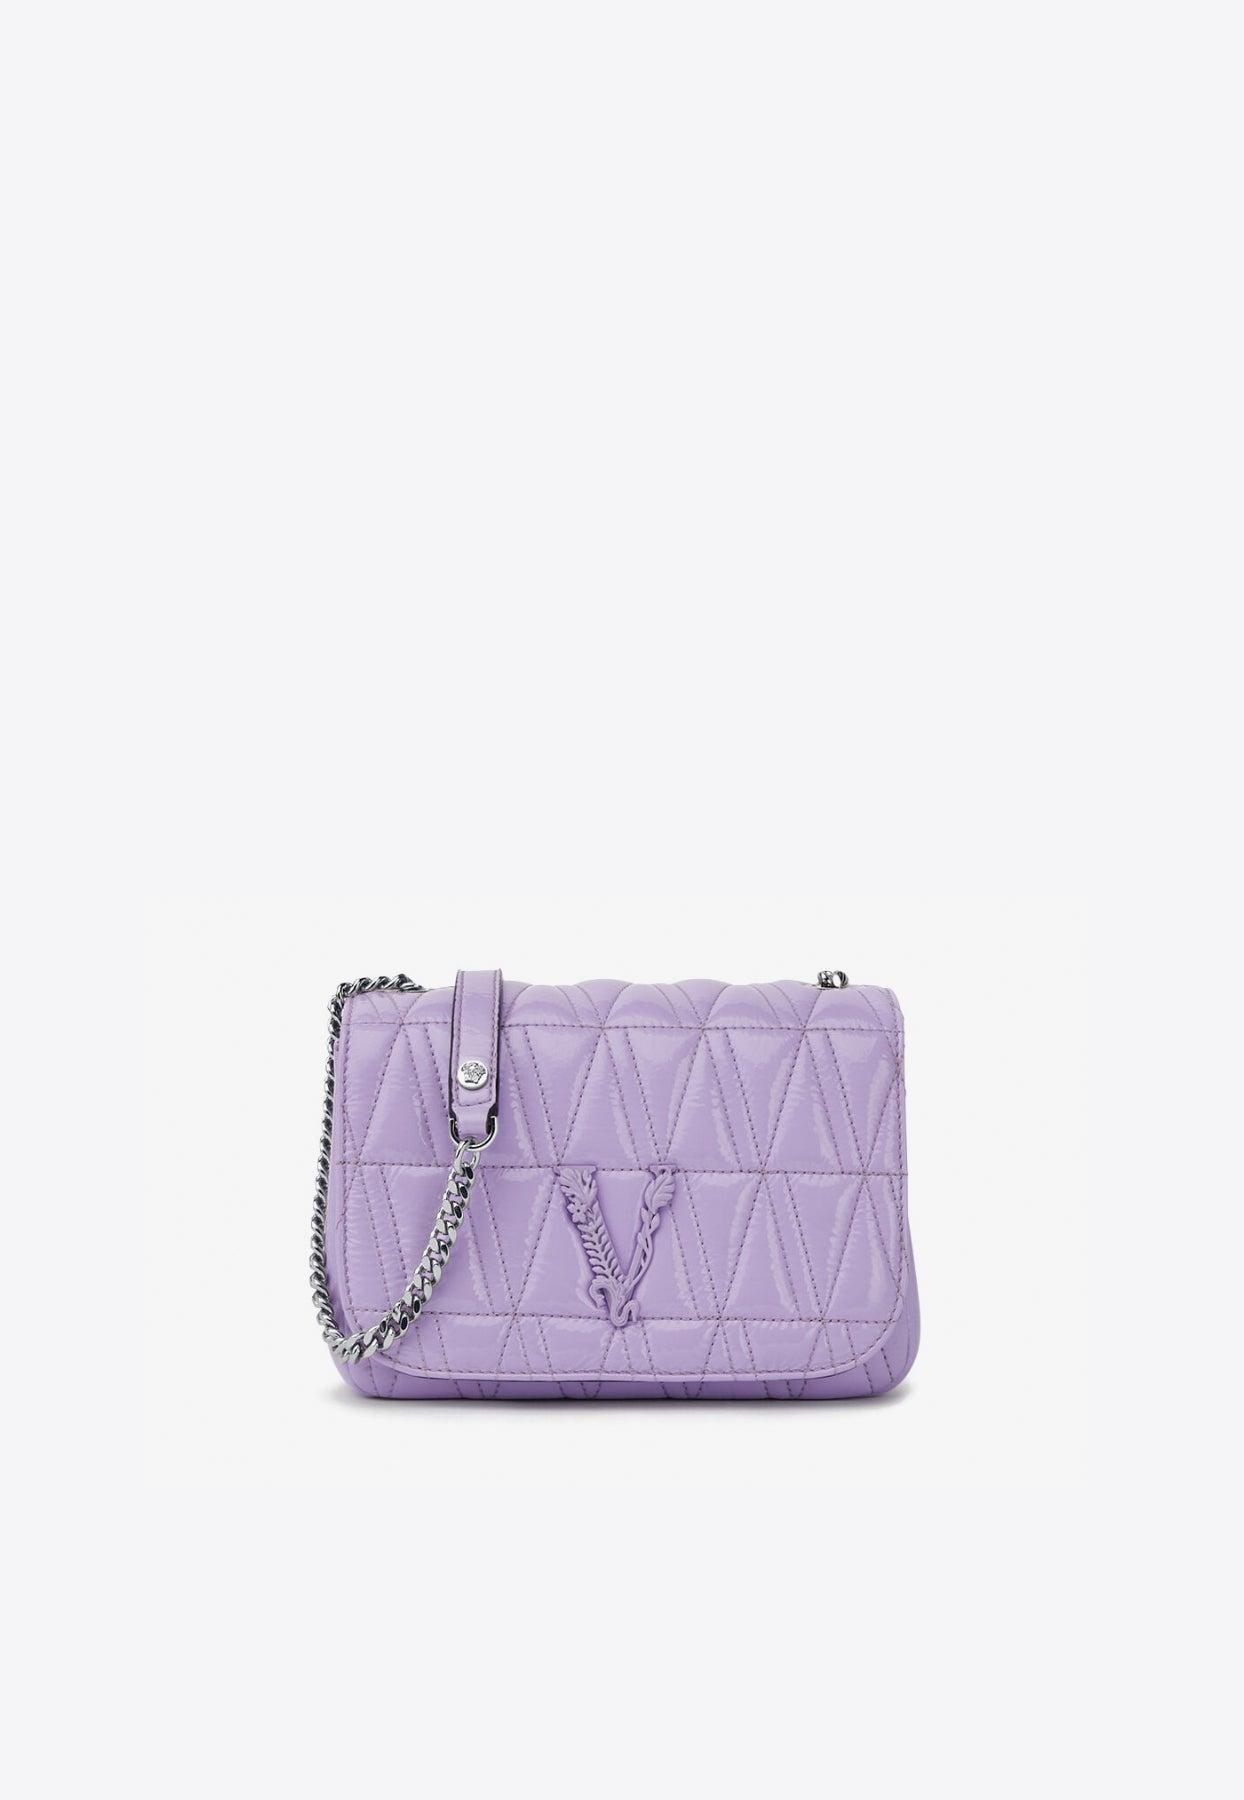 Versace Virtus Quilted Naplak Leather Shoulder Bag in Purple | Lyst